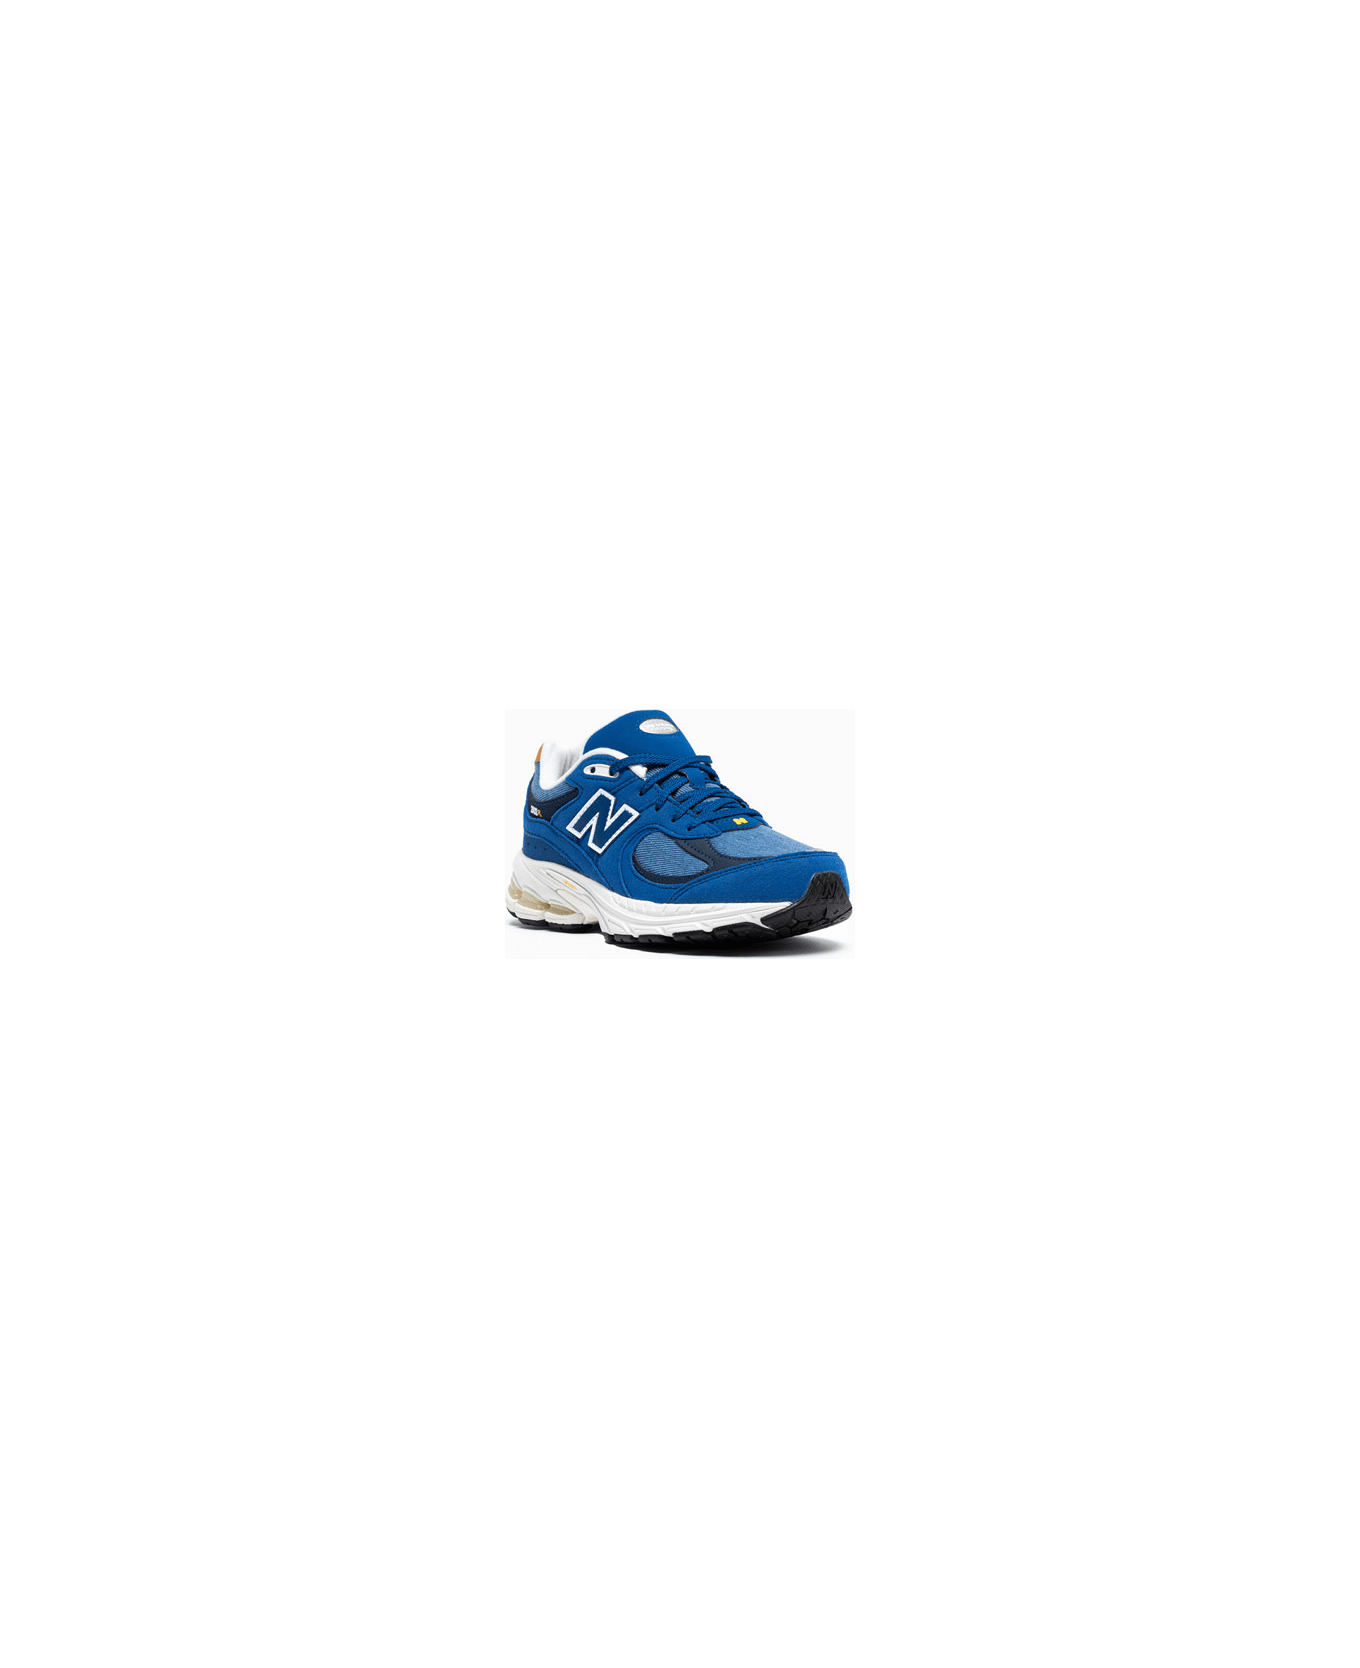 New Balance 2002r Sneakers Gc2002ea Gc - ATLANTIC BLUE